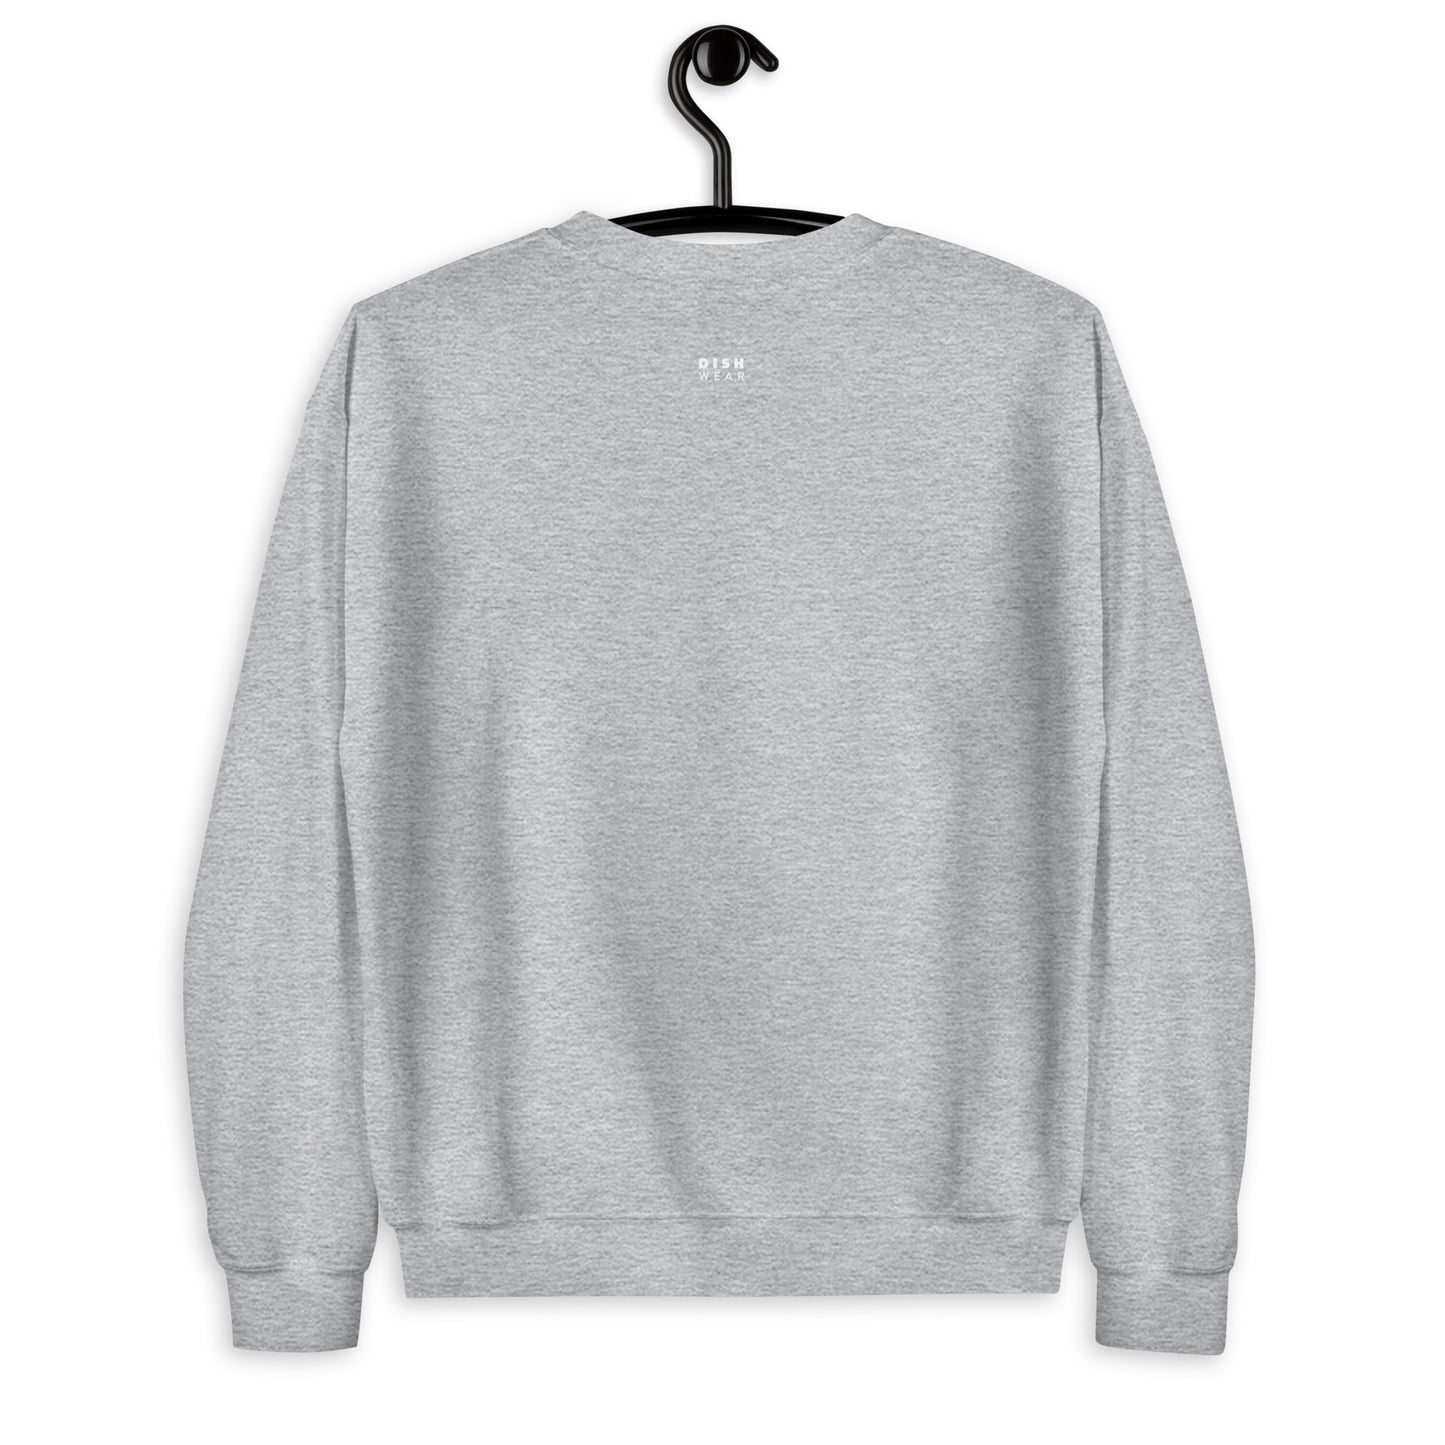 Organic Sweatshirt - Arched Font